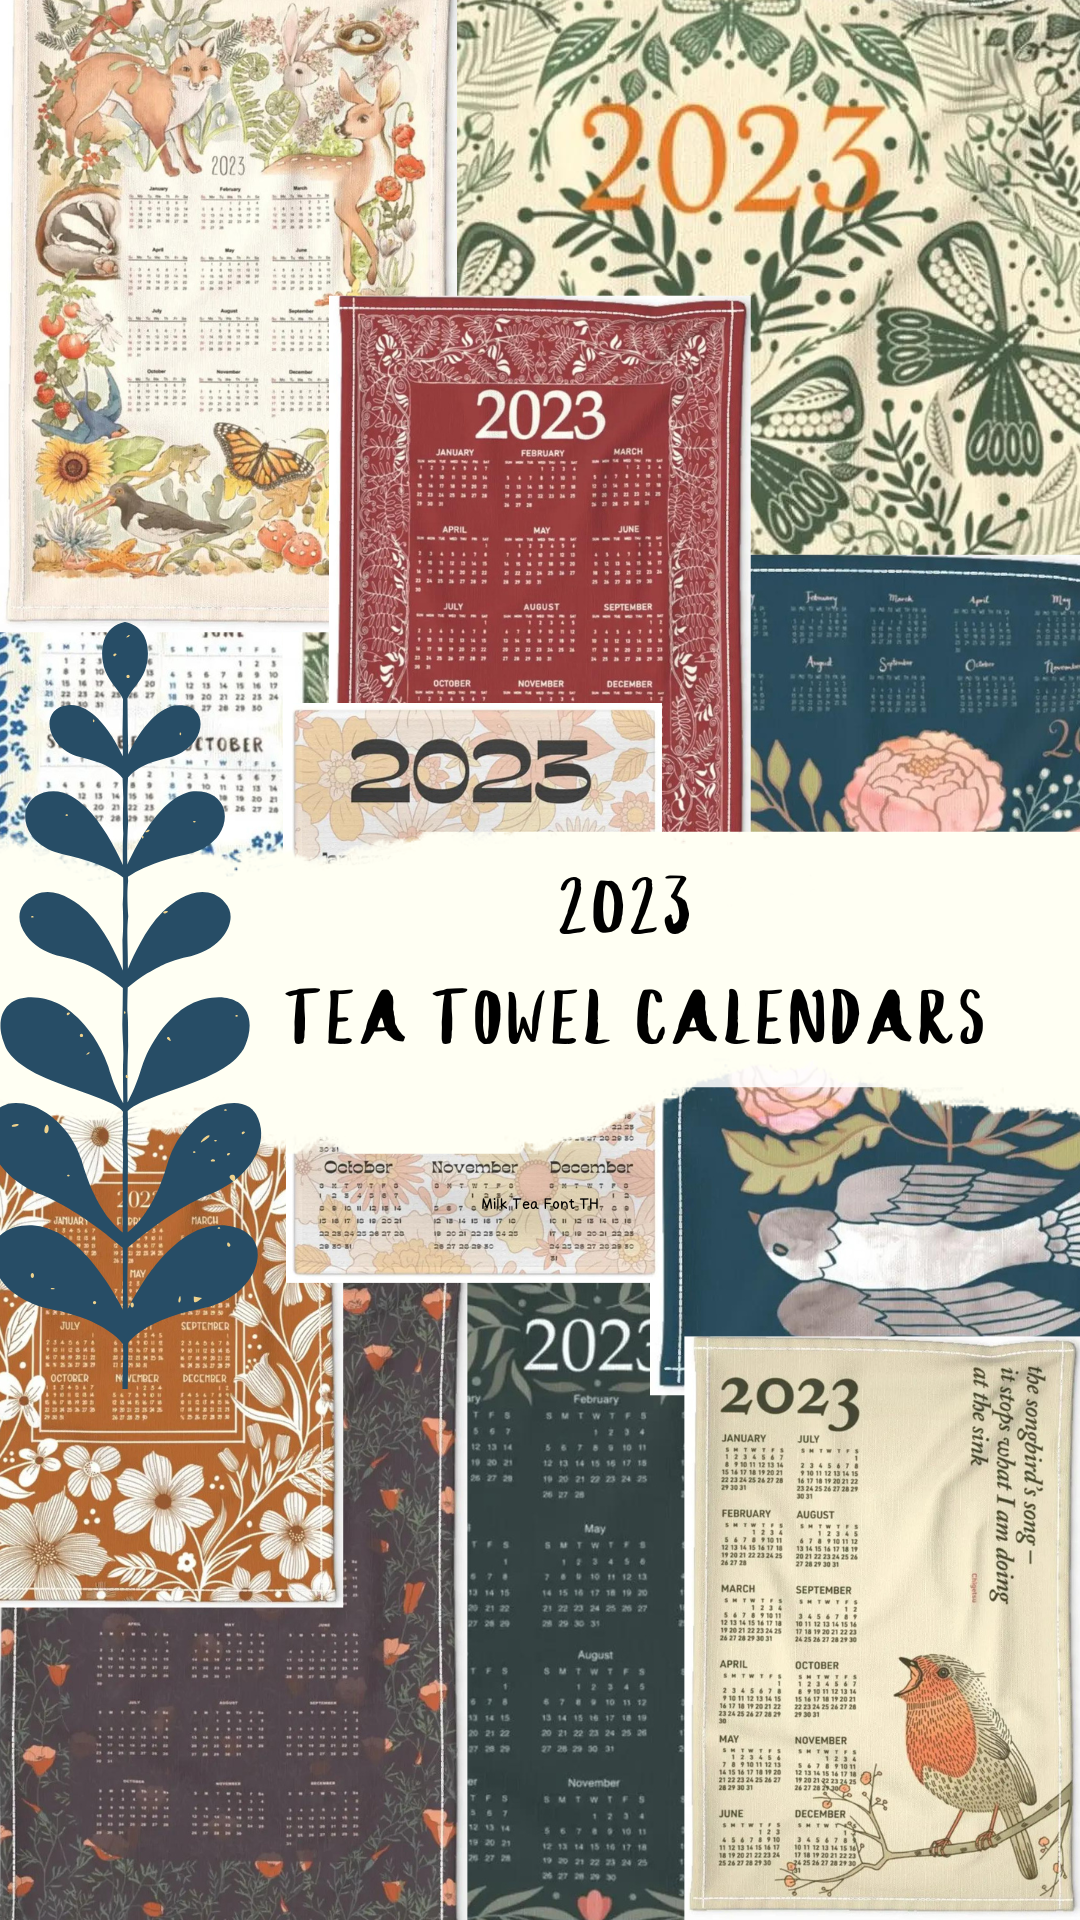 2023 Tea Towel Calendars